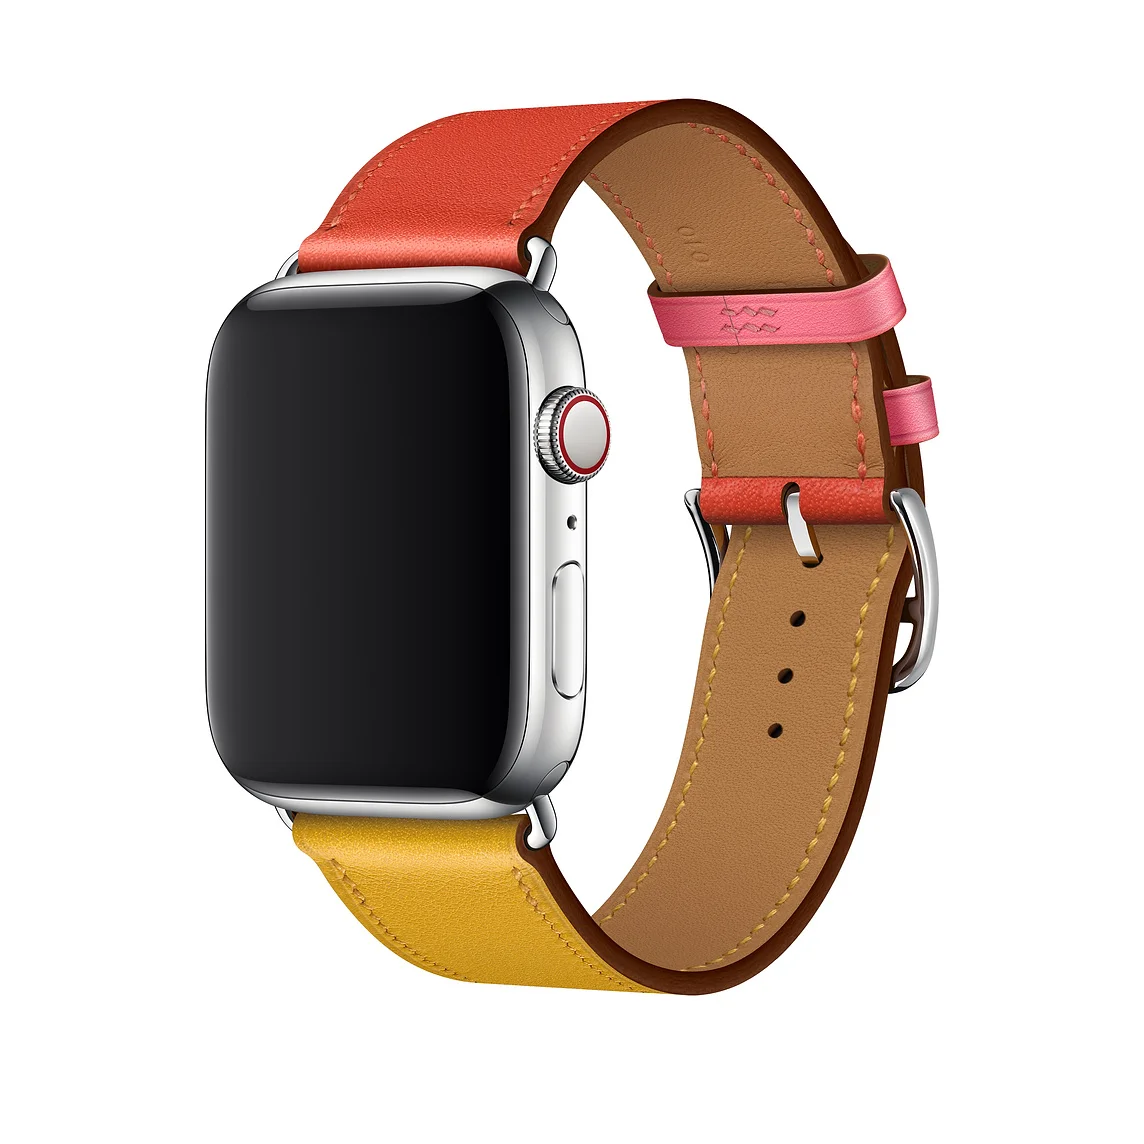 Řemínek iMore Single Tour Apple Watch Series 4/5/6/SE (44mm) - Bordó/Žlutý